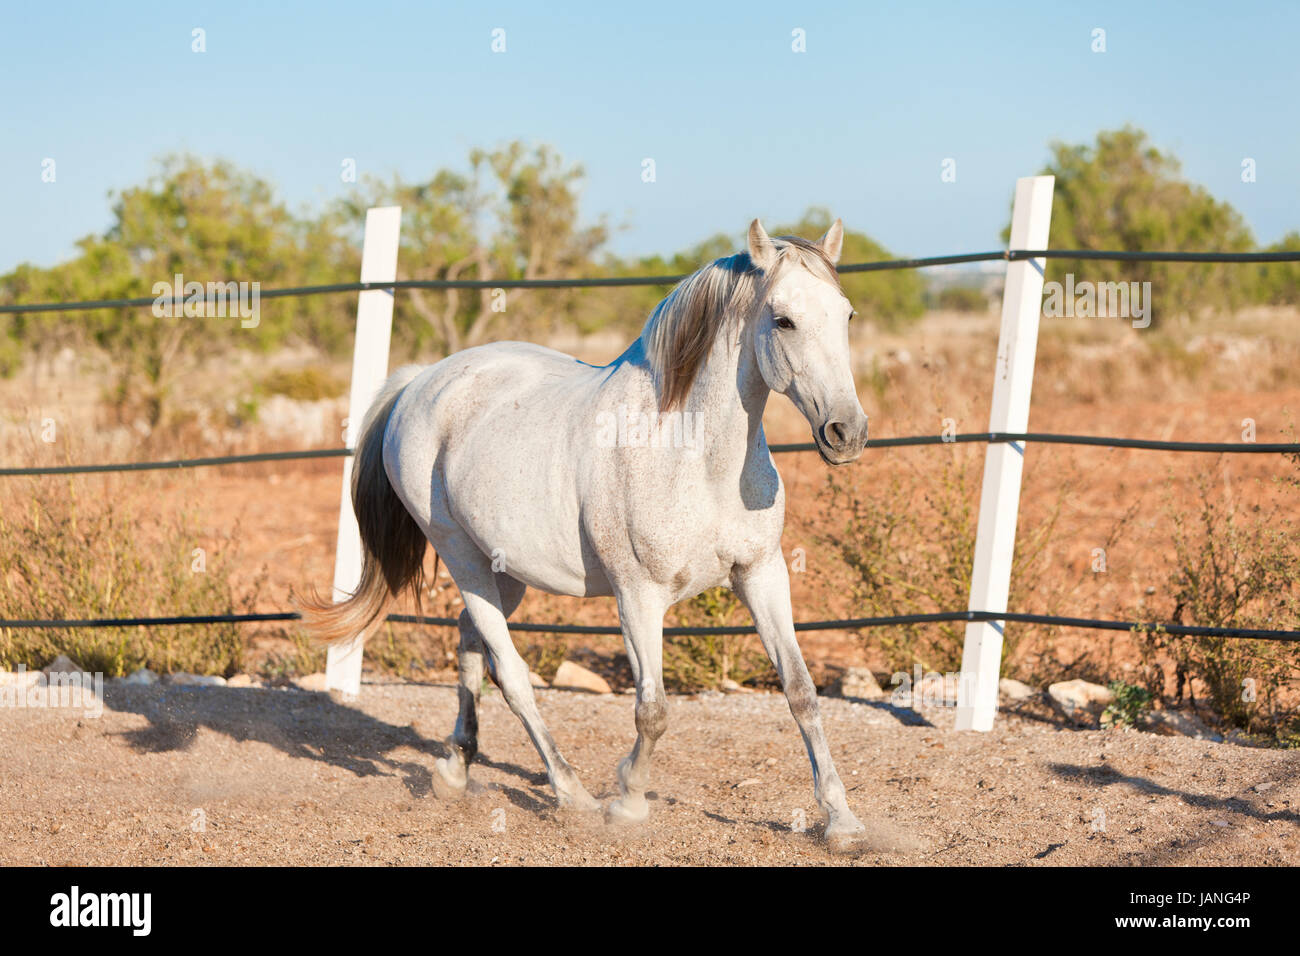 PRE Pura raza espanola pferde portrait im freien im sommer Stock Photo